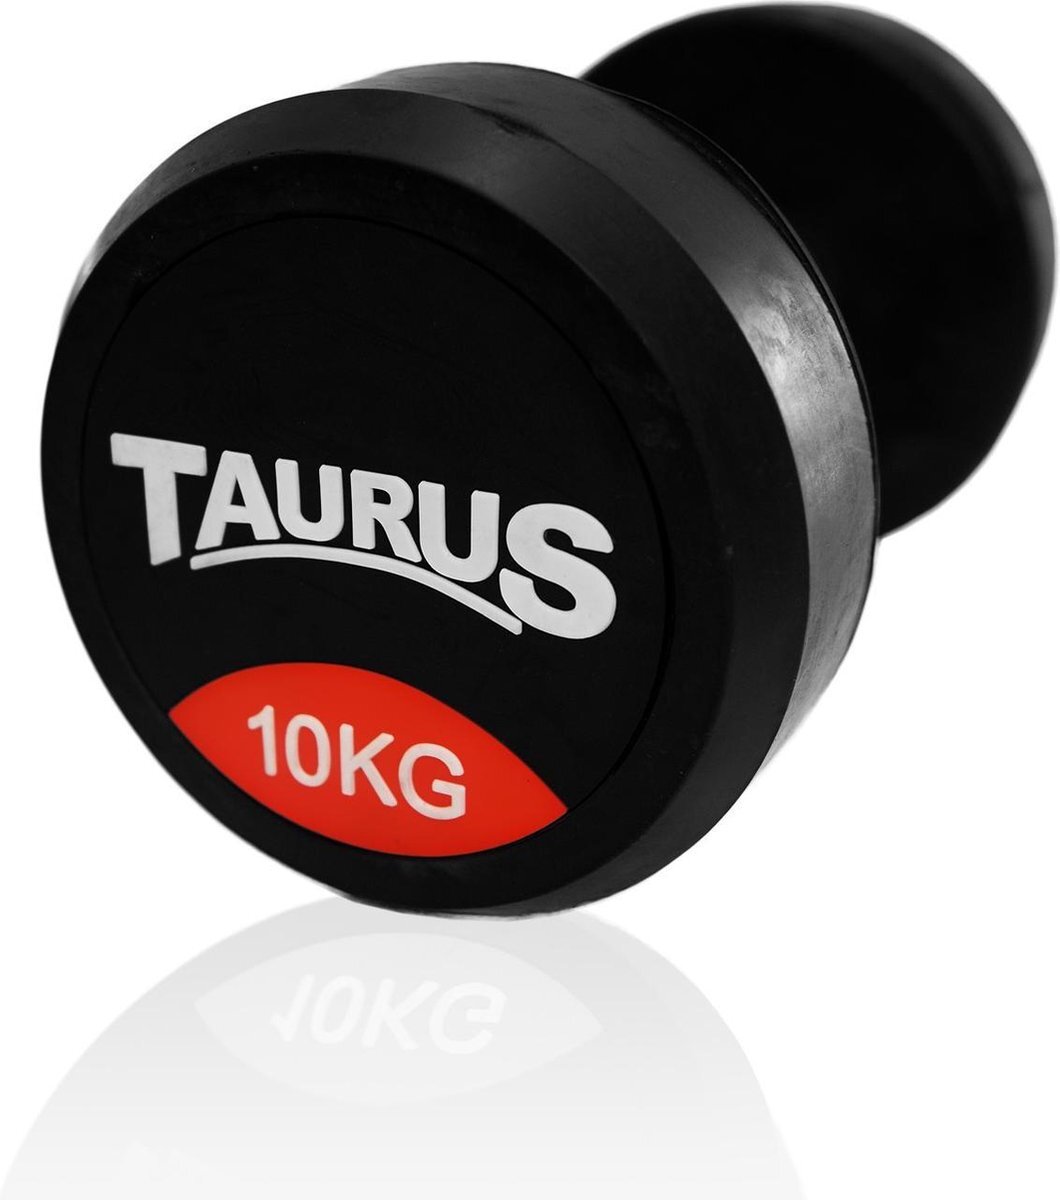 Taurus halter gerubberd - Dumbbell 30 kg